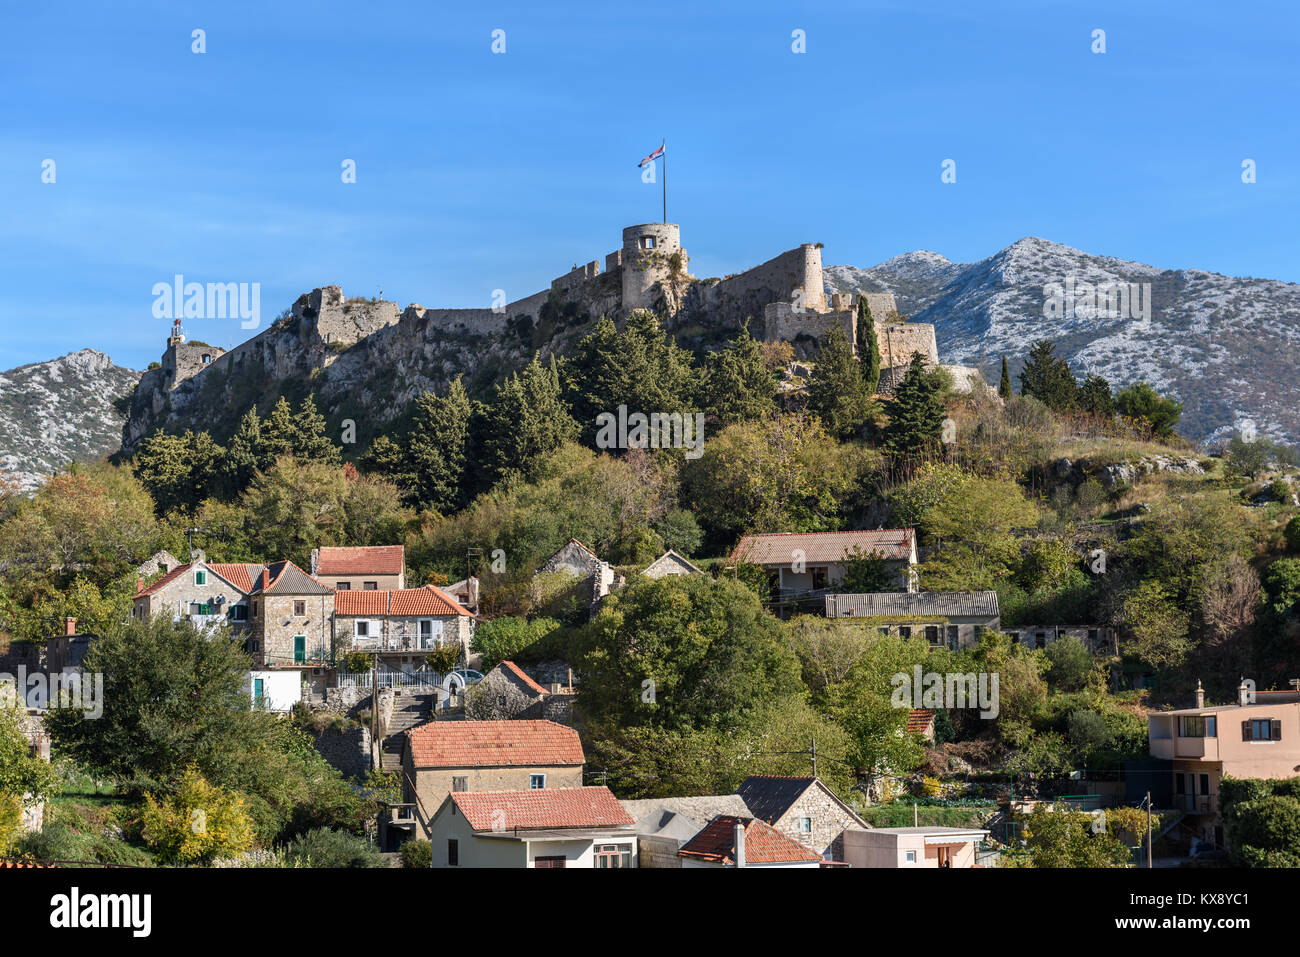 Book Tickets & Tours - Klis Fortress (Tvrdava Klis), Split - Viator